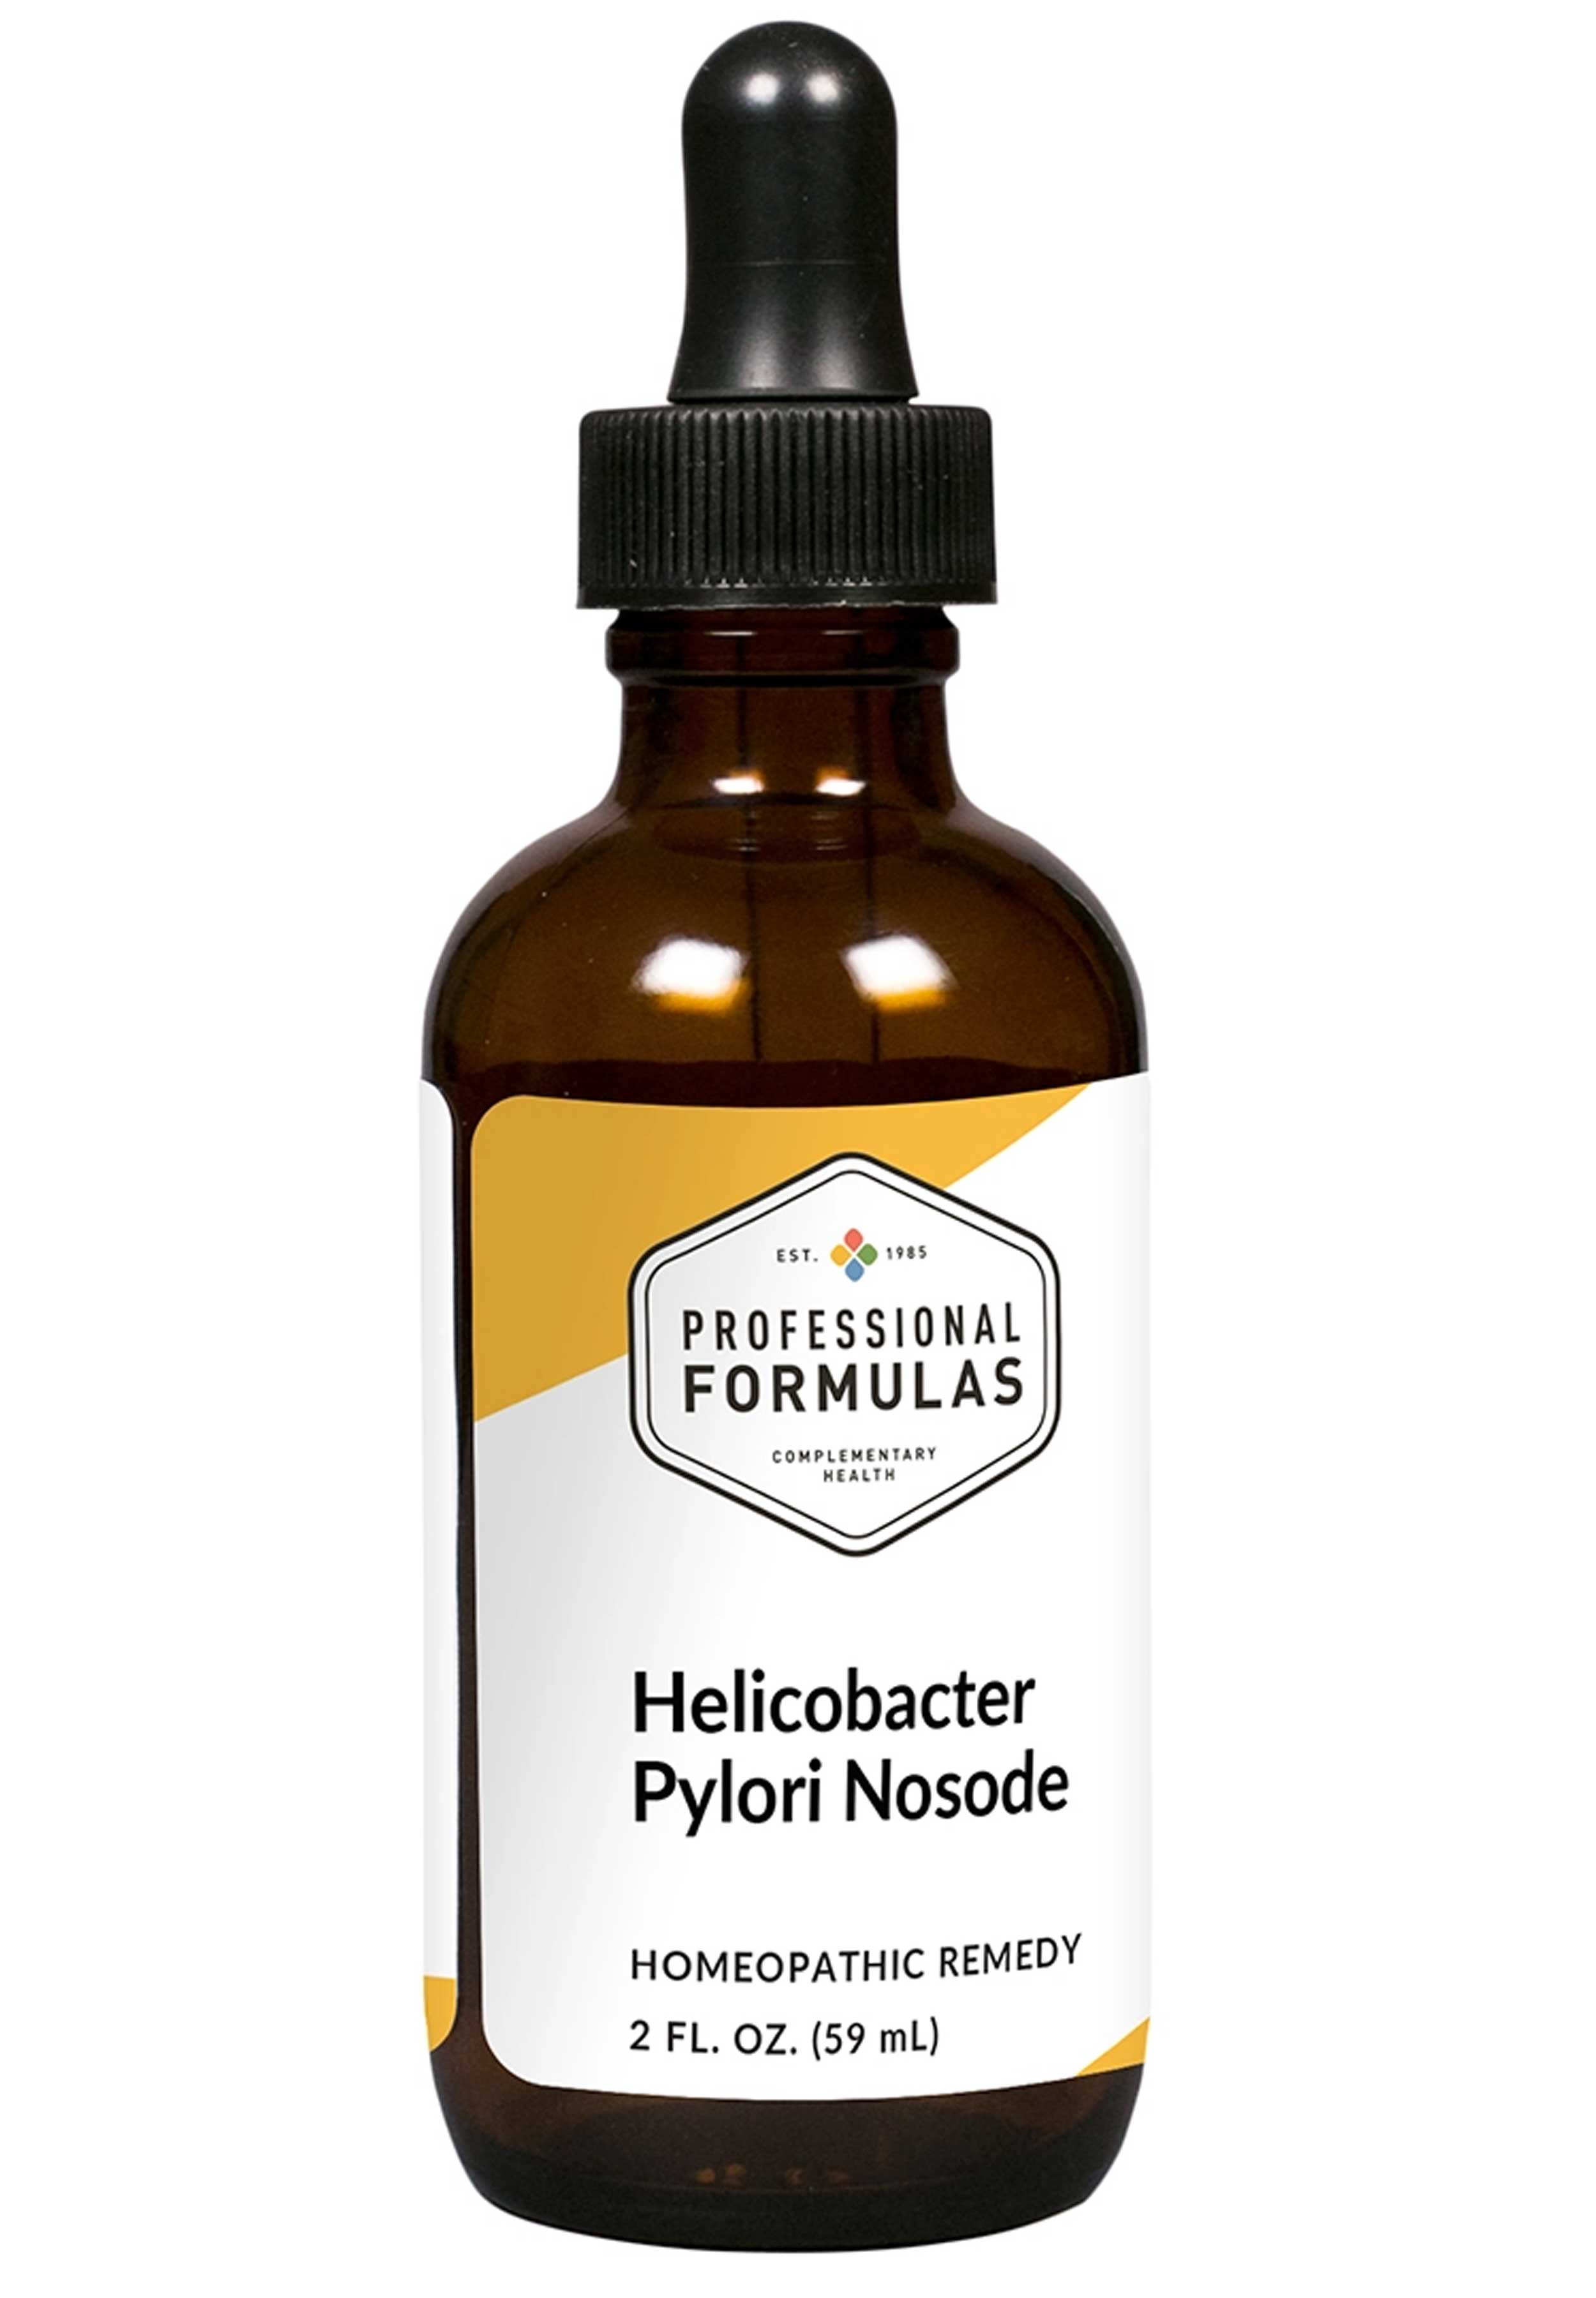 Professional Formulas Helicobacter Pylori Nosode